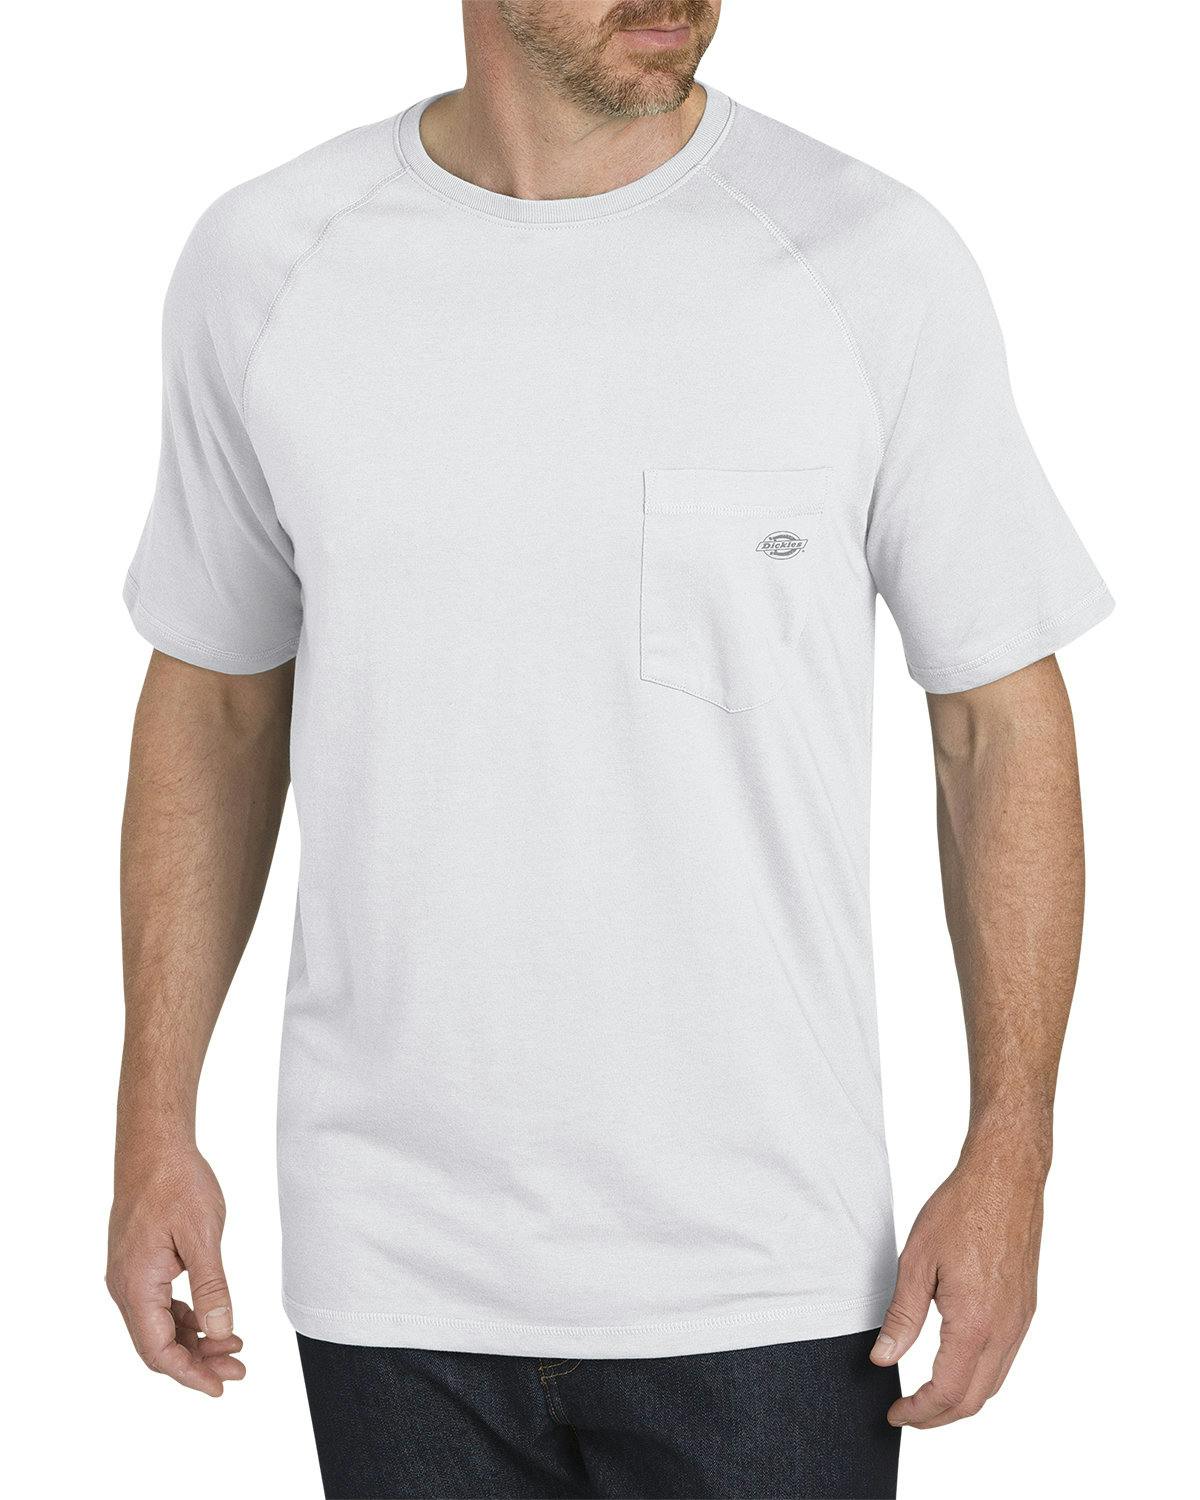 Image for Men's Temp-IQ Performance T-Shirt